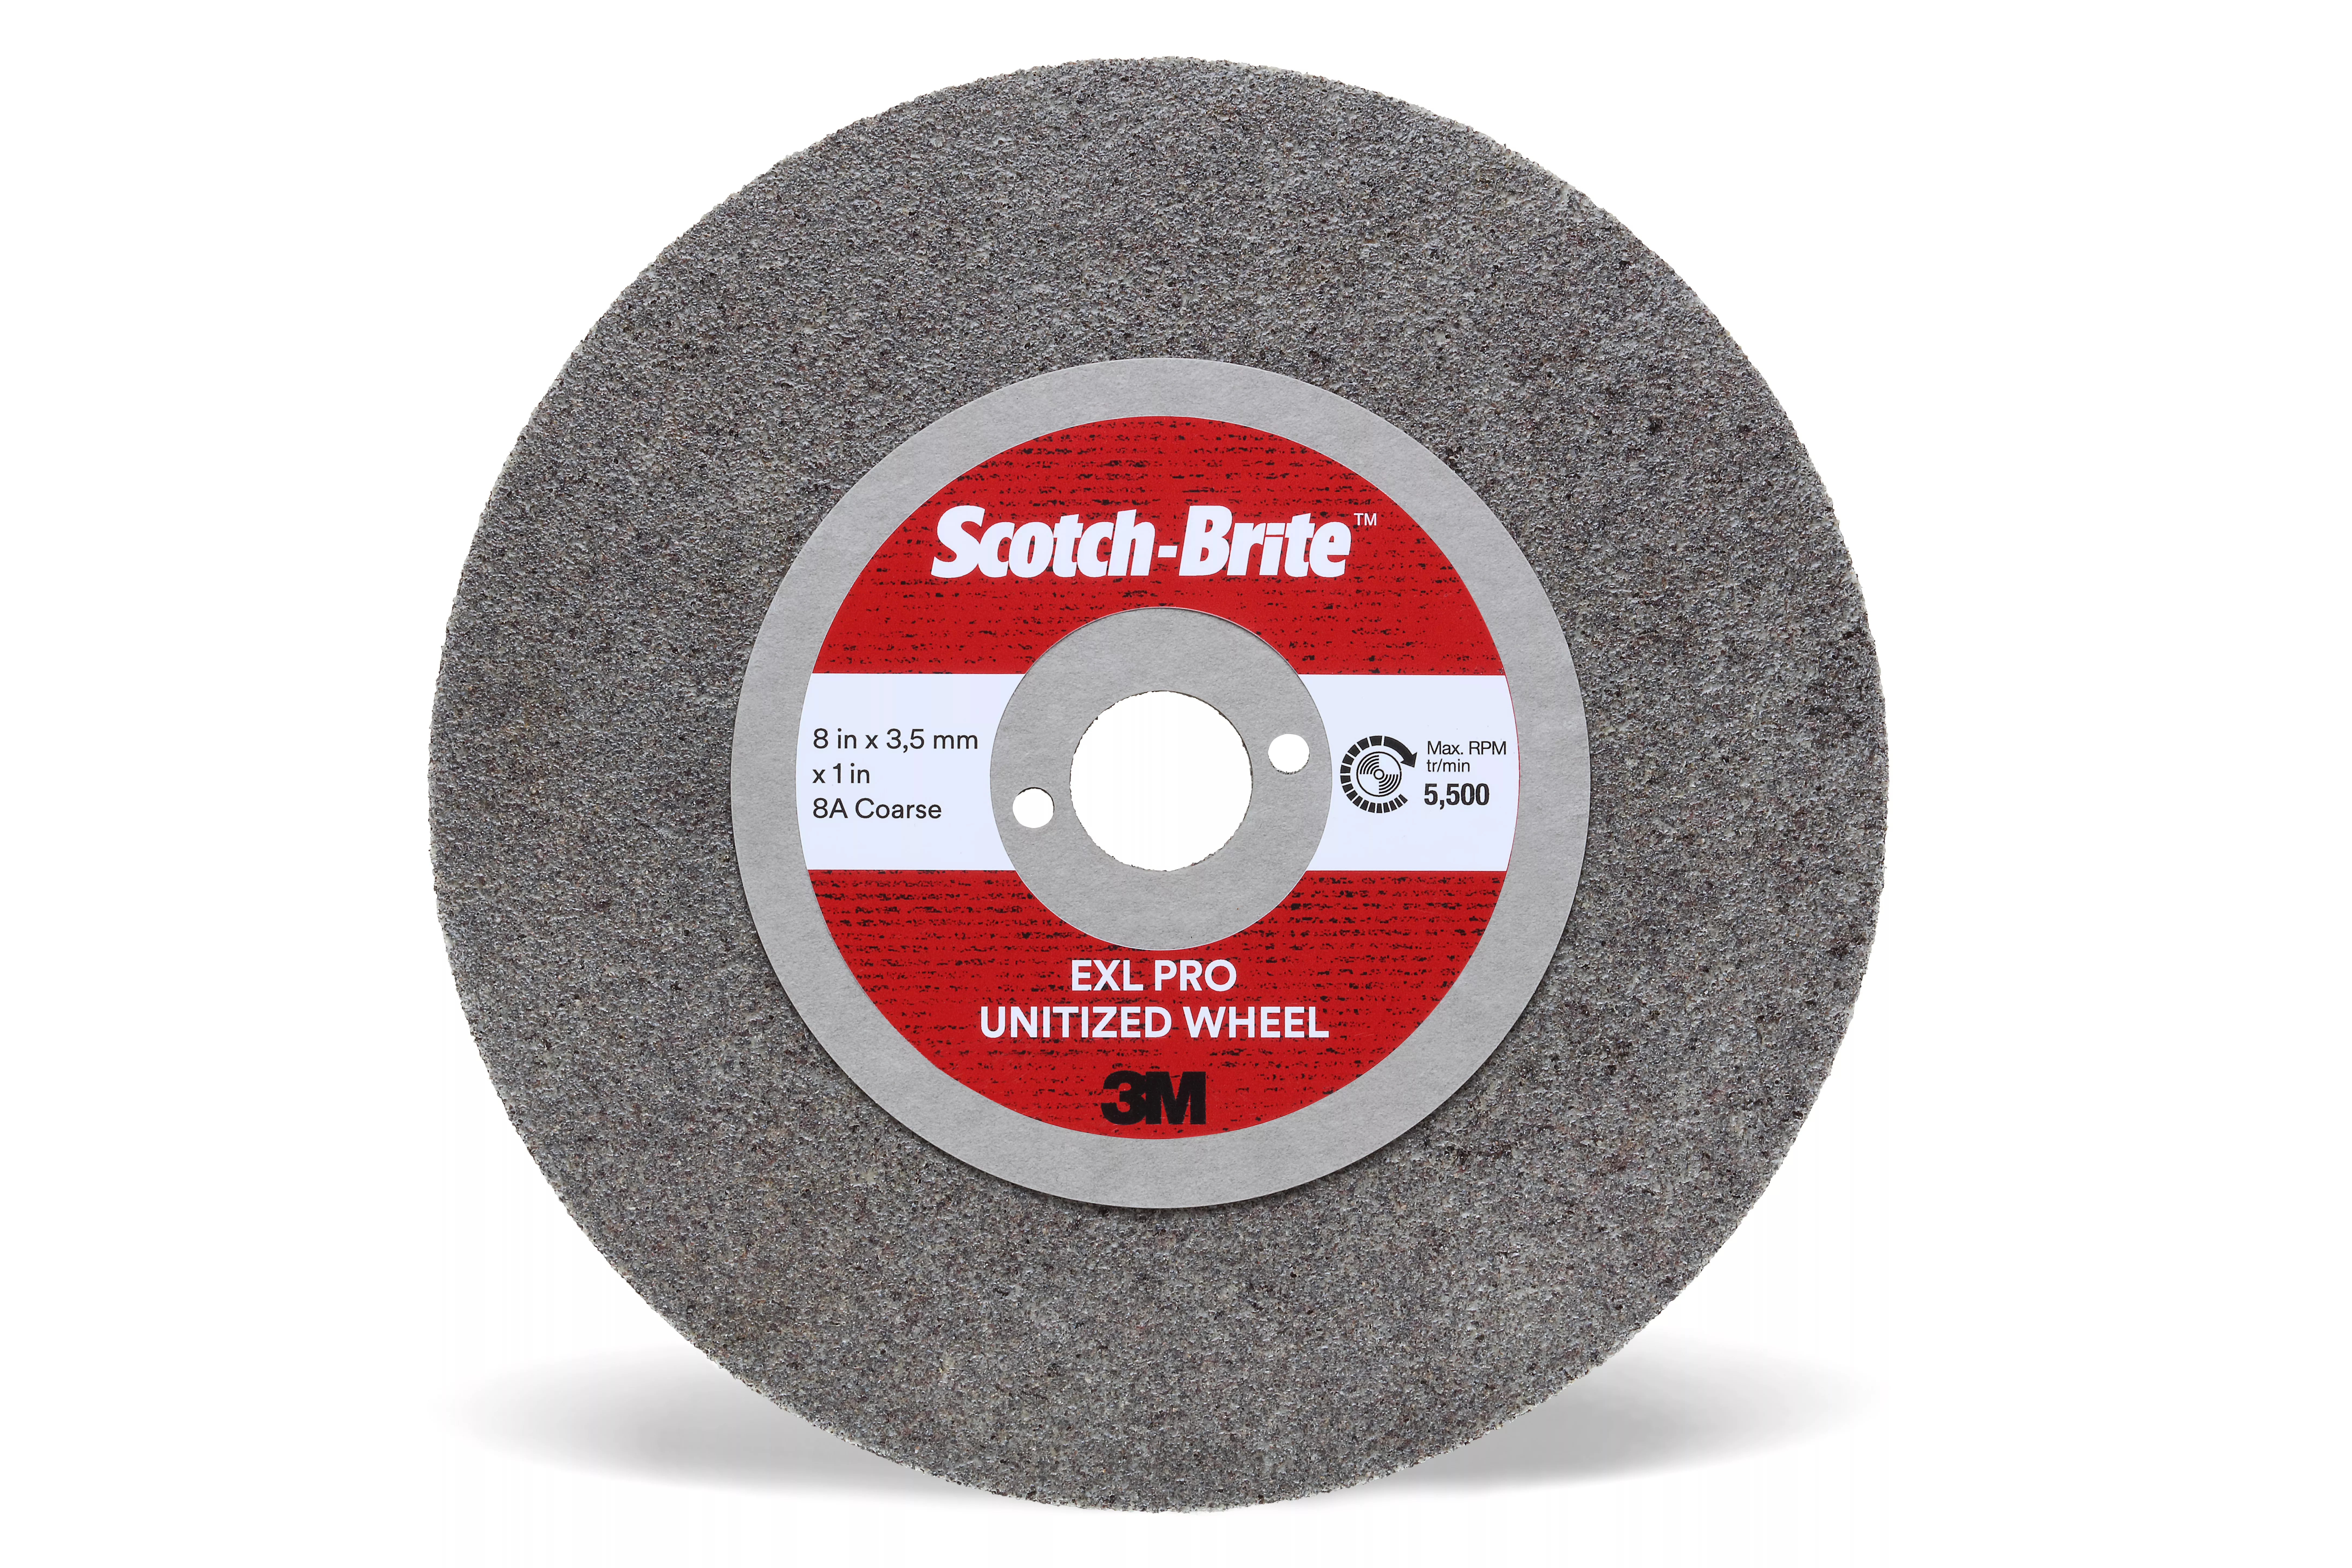 SKU 7100133704 | Scotch-Brite™ EXL PRO Unitized Wheel